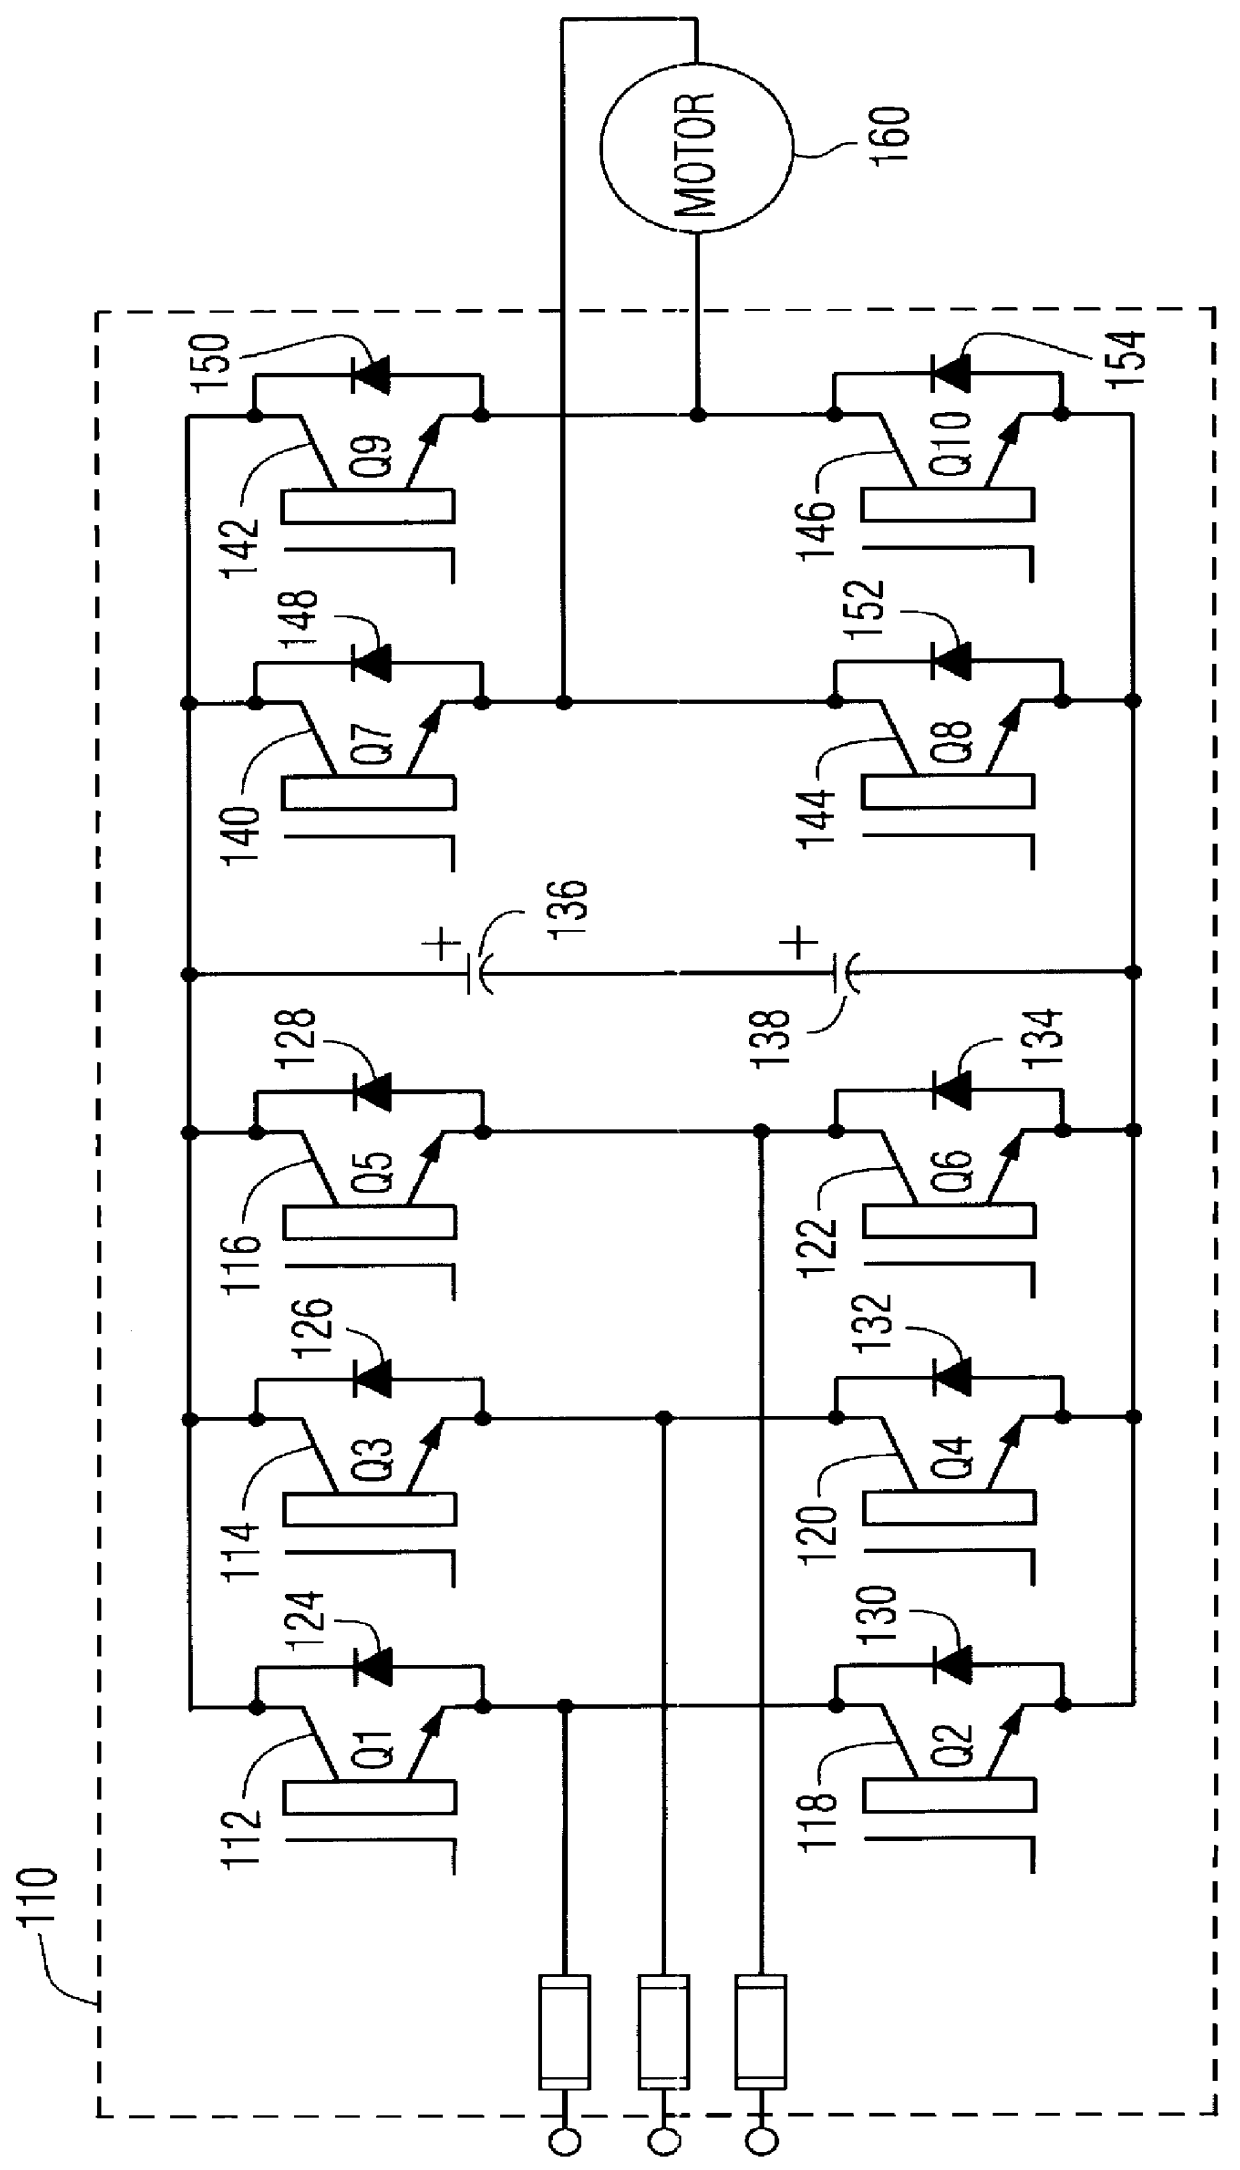 Four-quadrant AC-AC drive and method